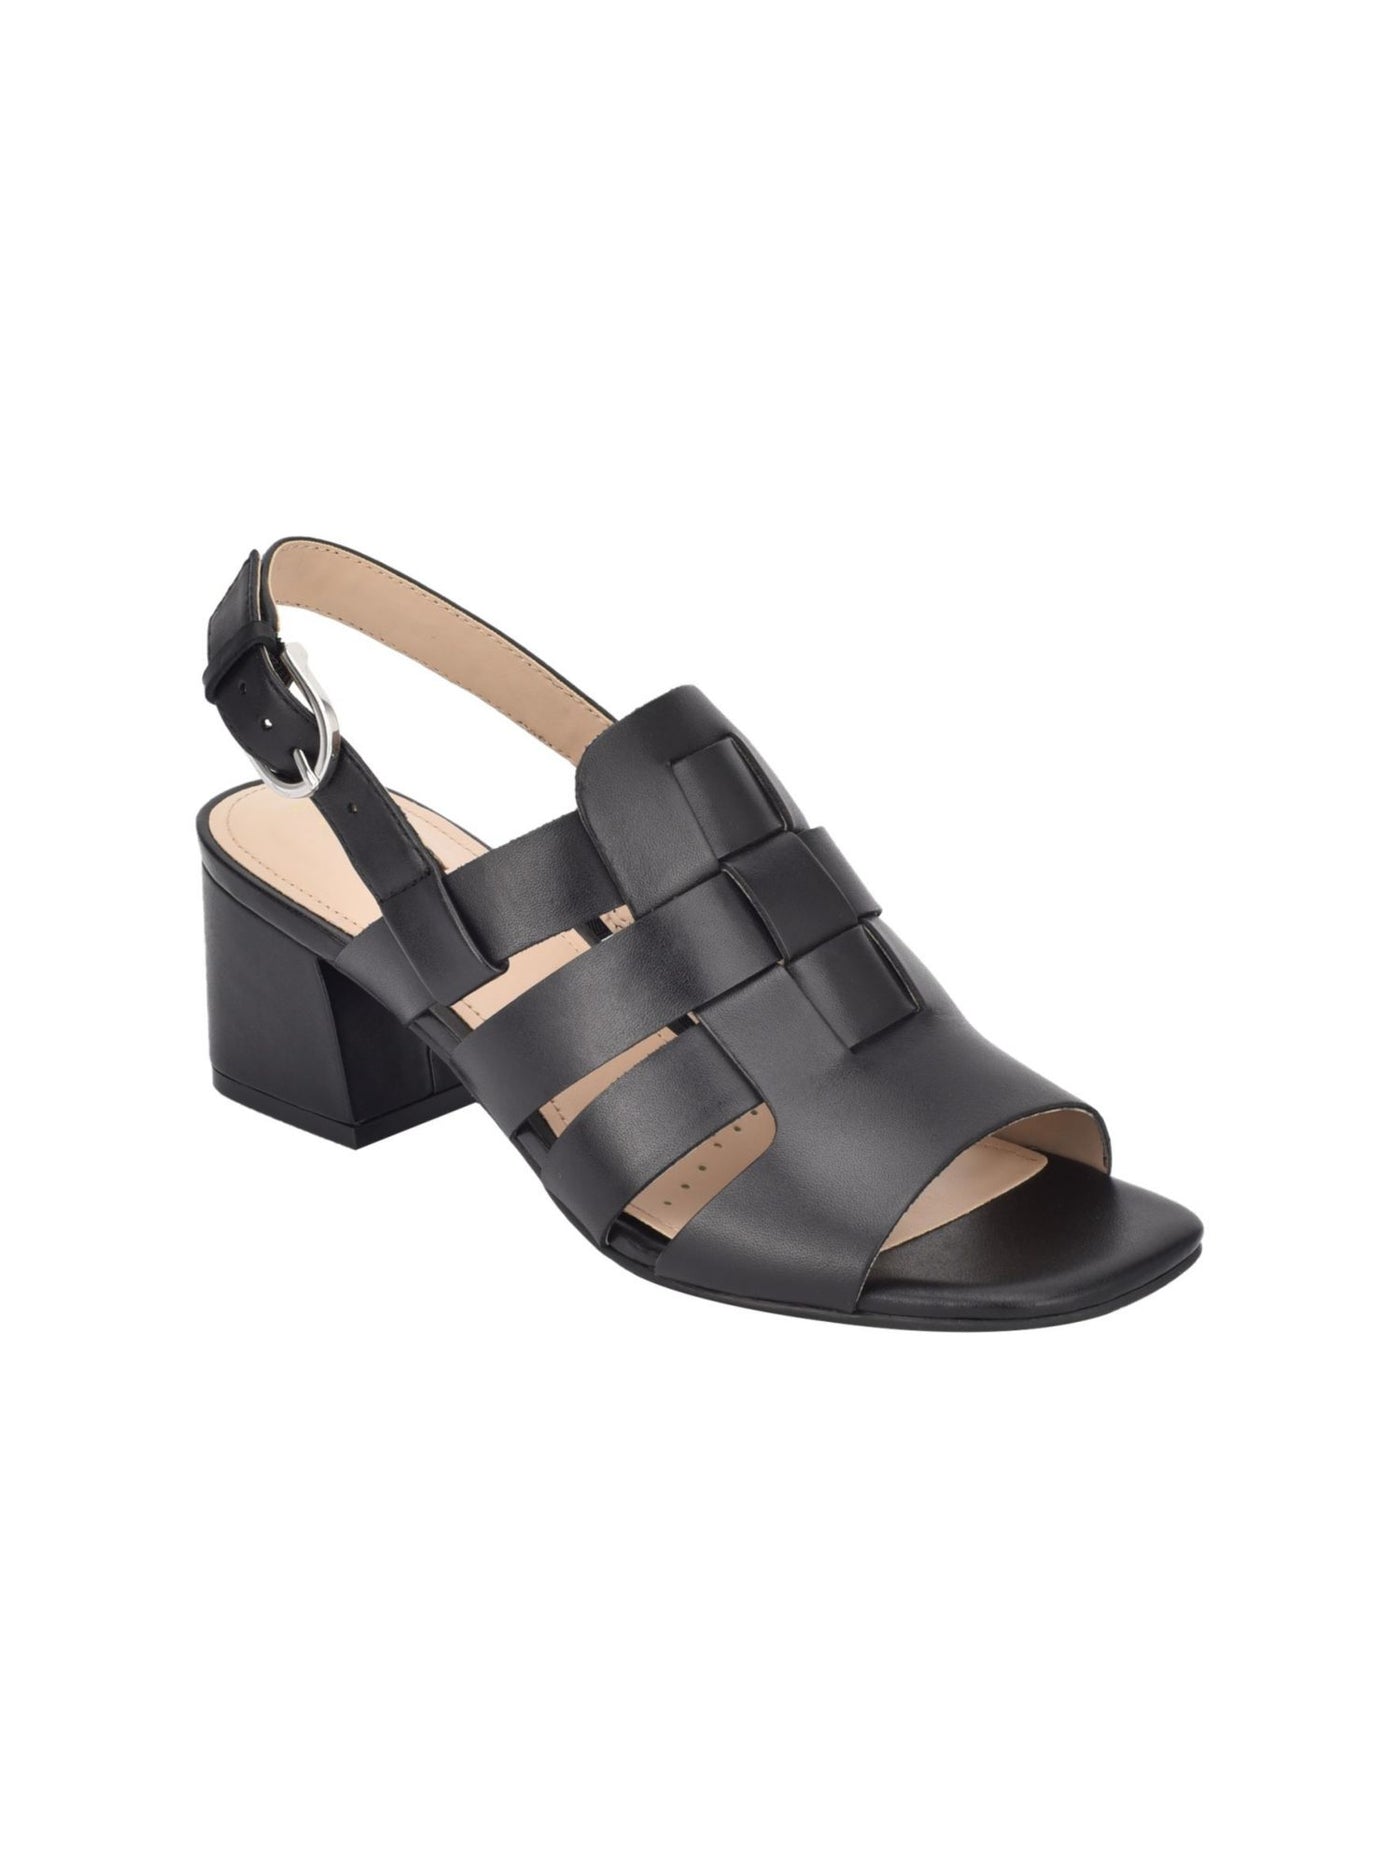 EVOLVE Womens Black Slip Resistant Cushioned Mona Open Toe Block Heel Buckle Dress Sandals Shoes 9.5